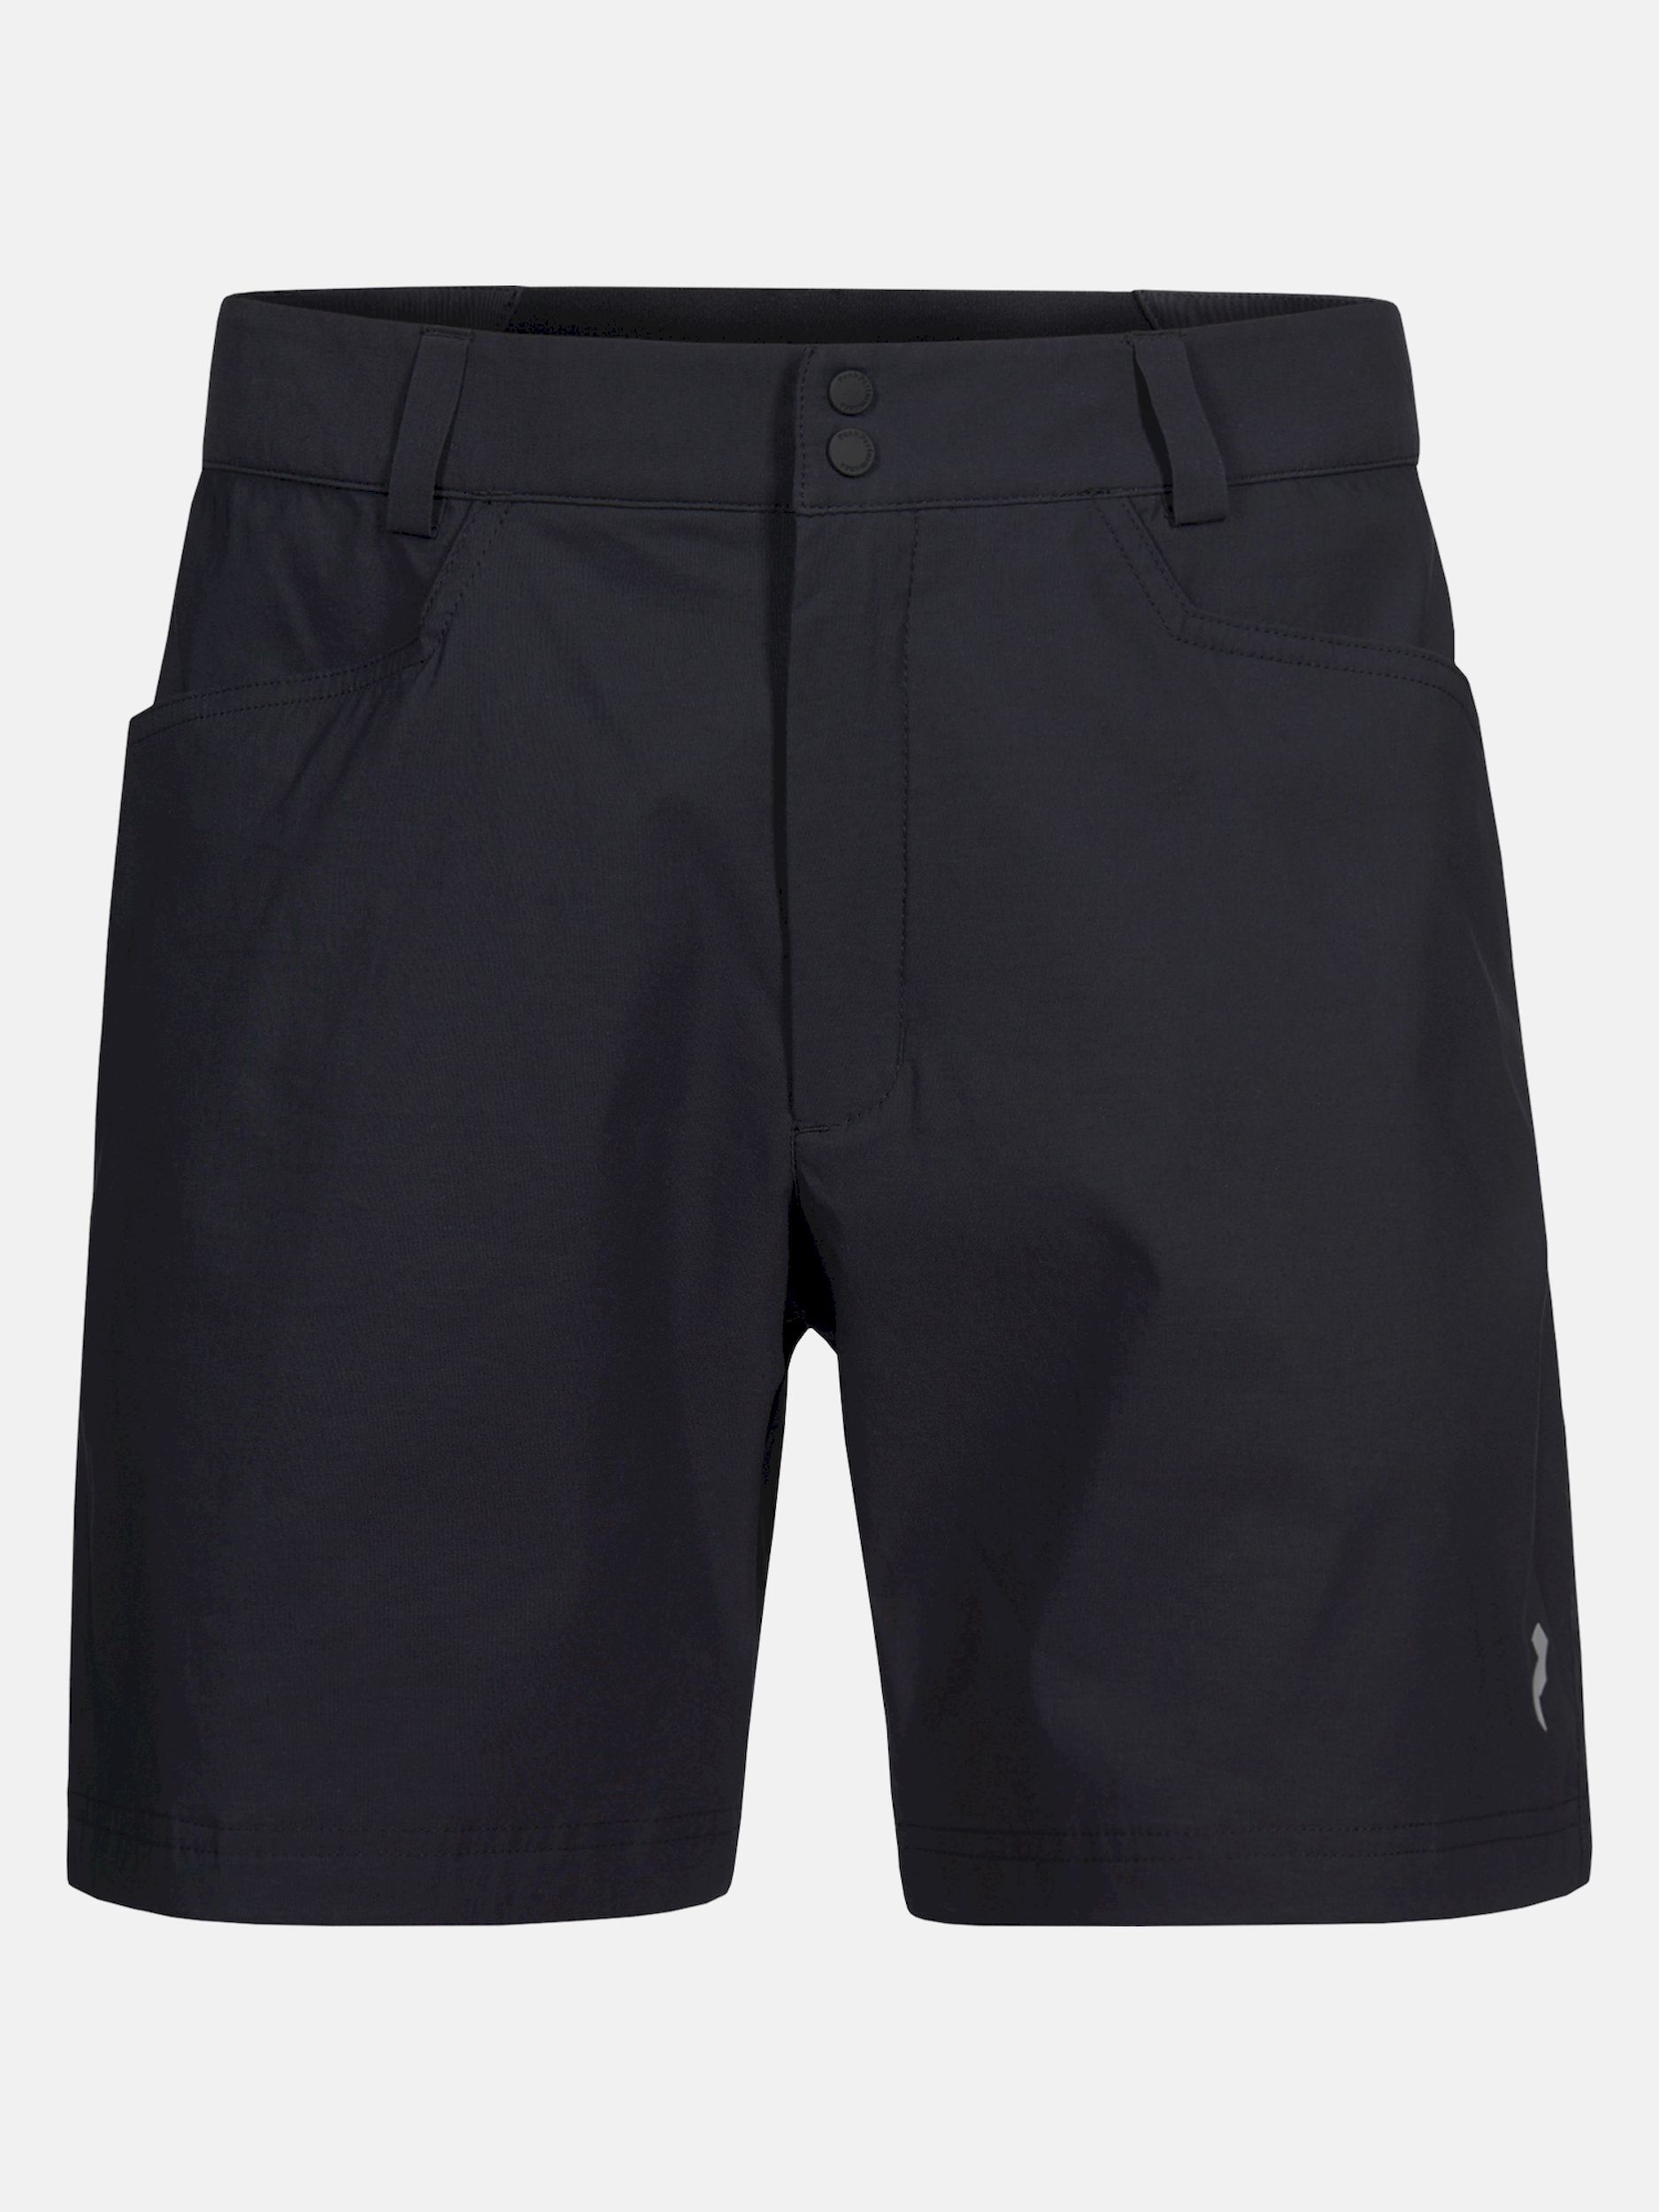 Peak Performance Iconiq Shorts - Walking shorts - Men's